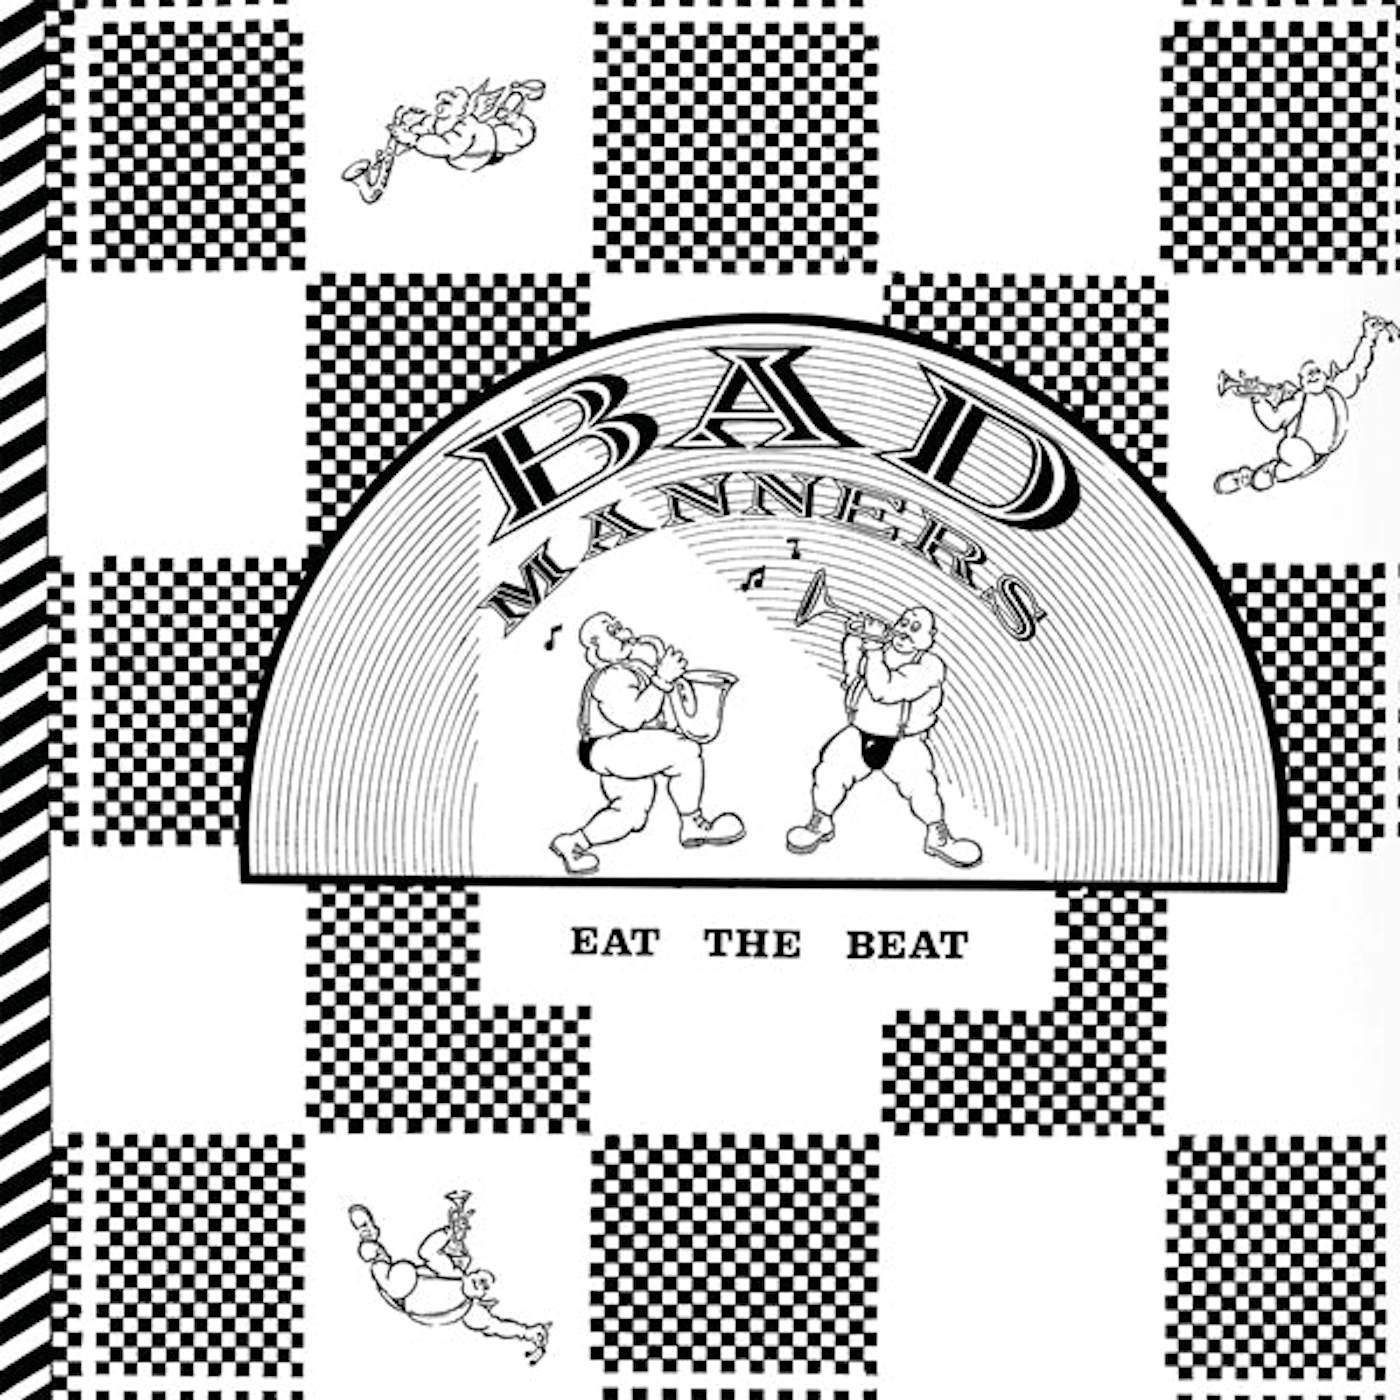 Bad Manners LP - Eat The Beat (White Vinyl)